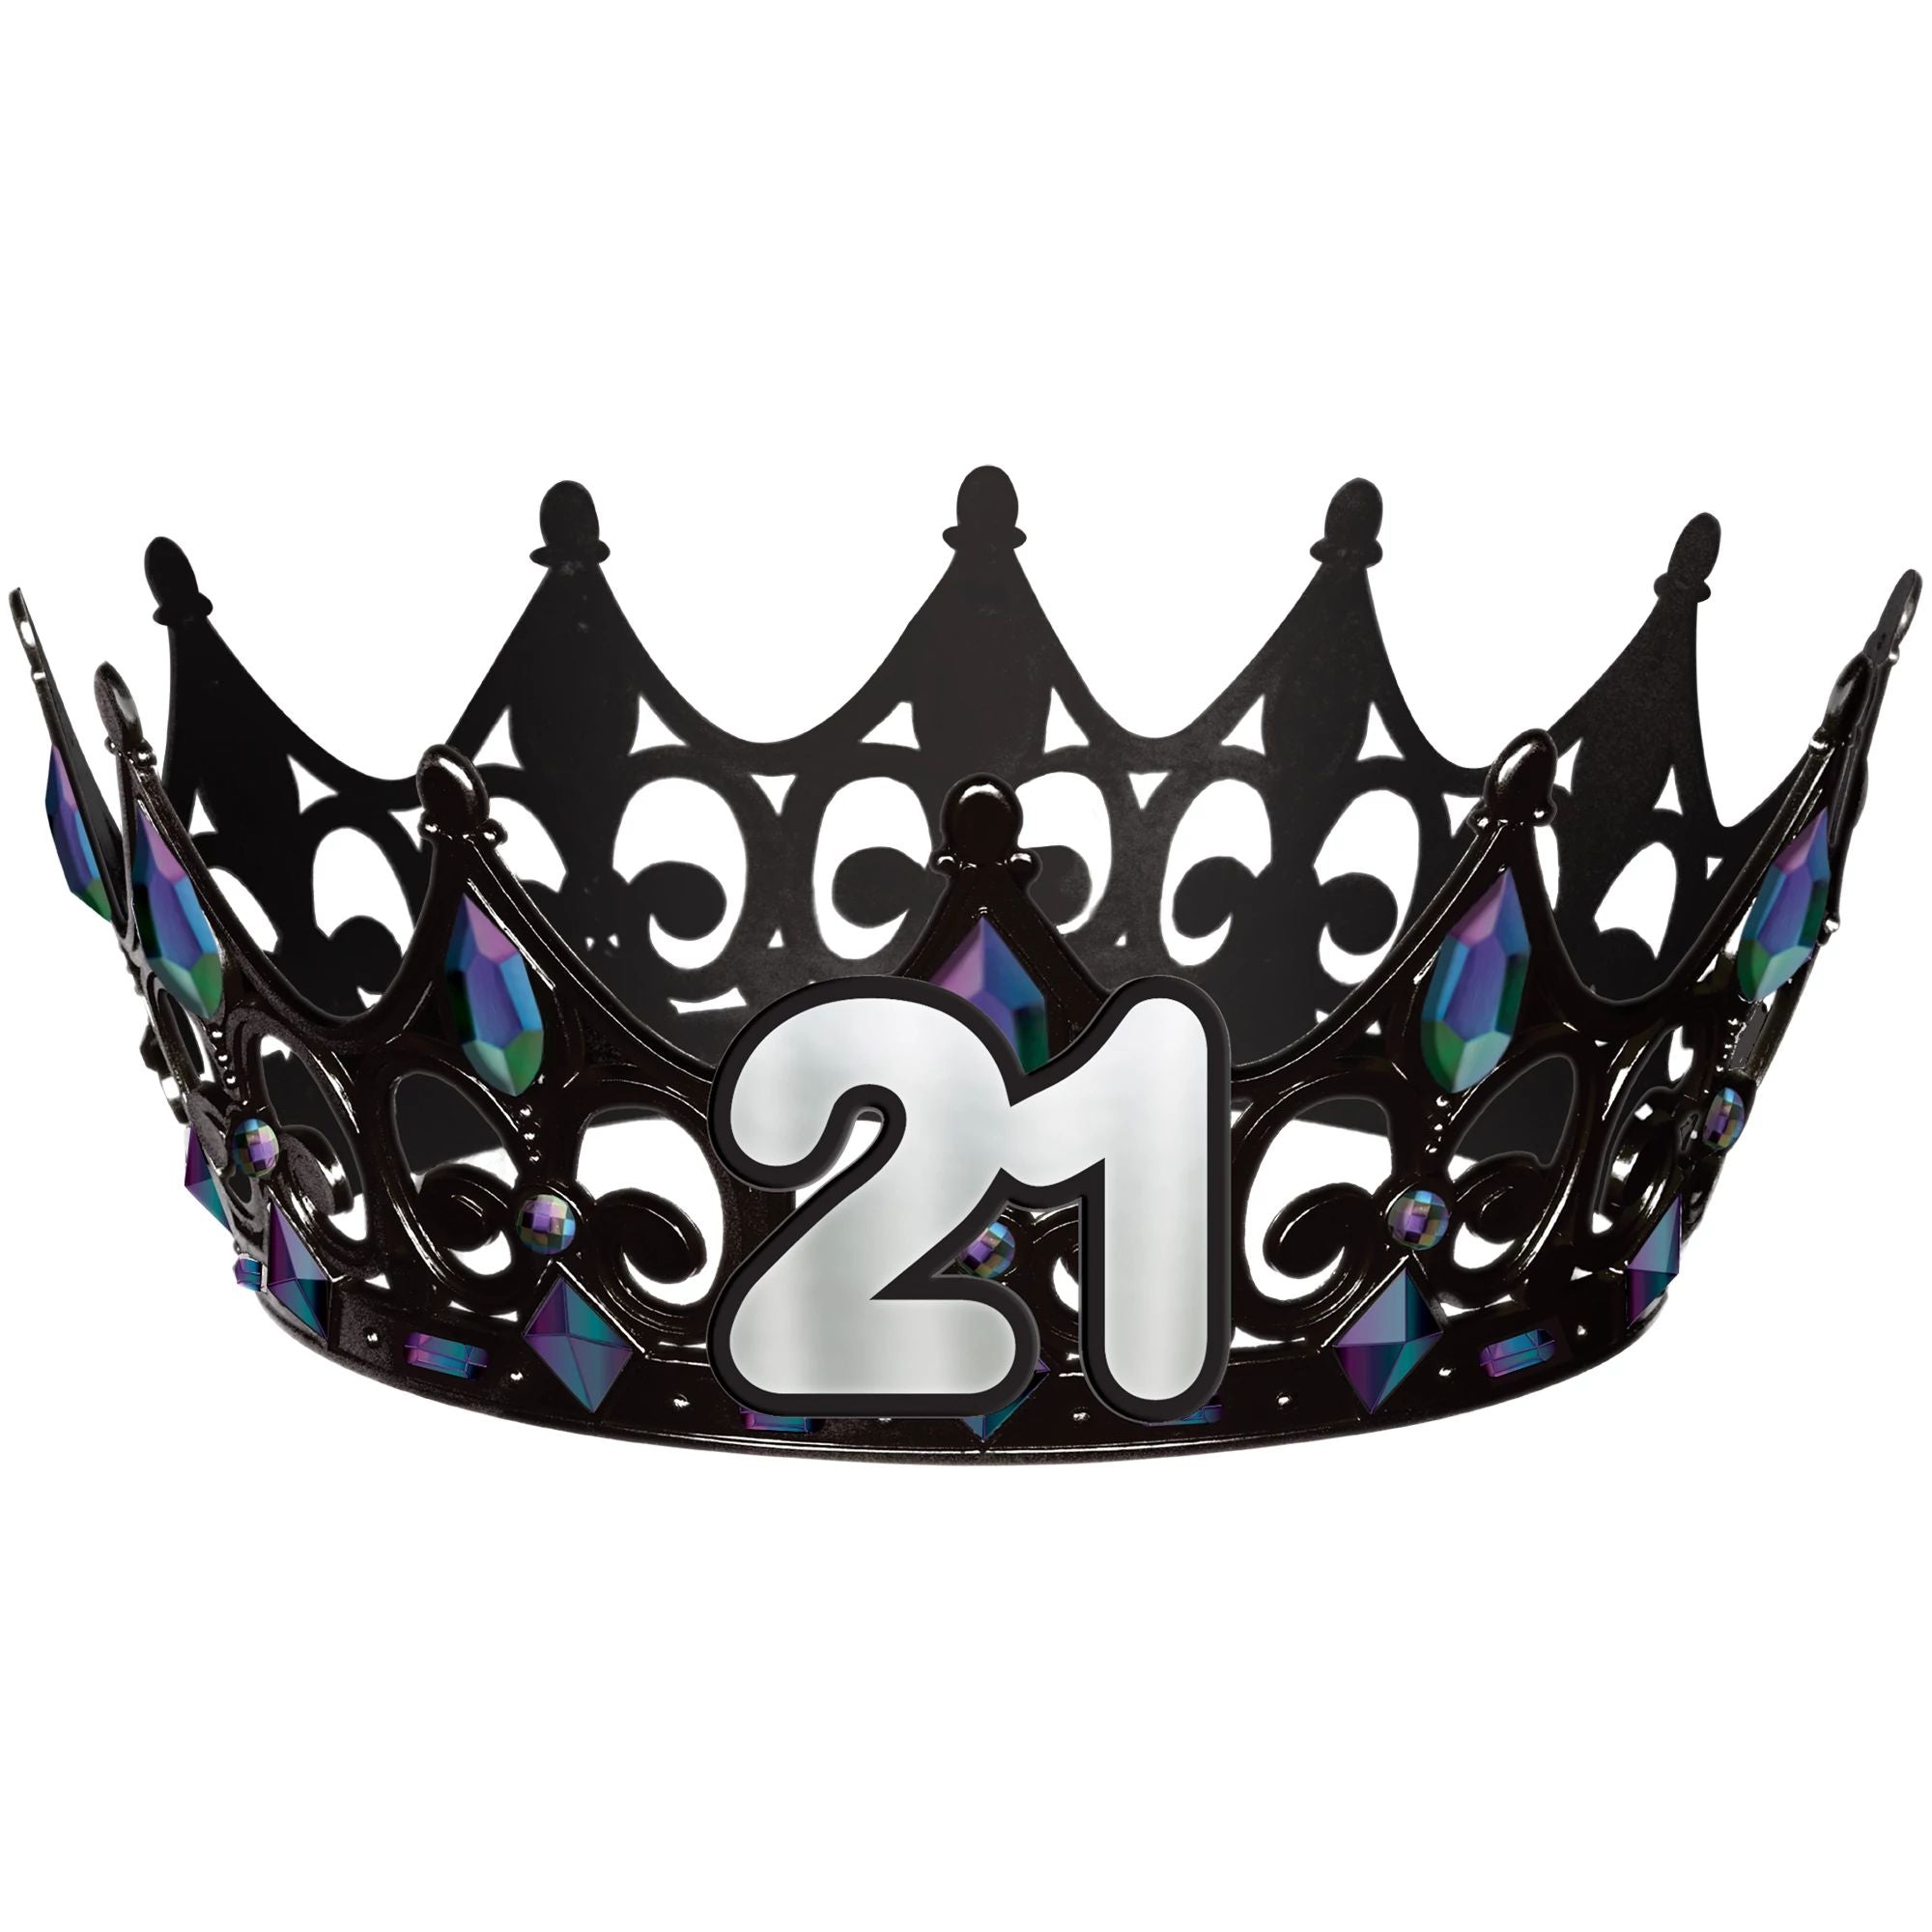 Finally 21 Jeweled Crown